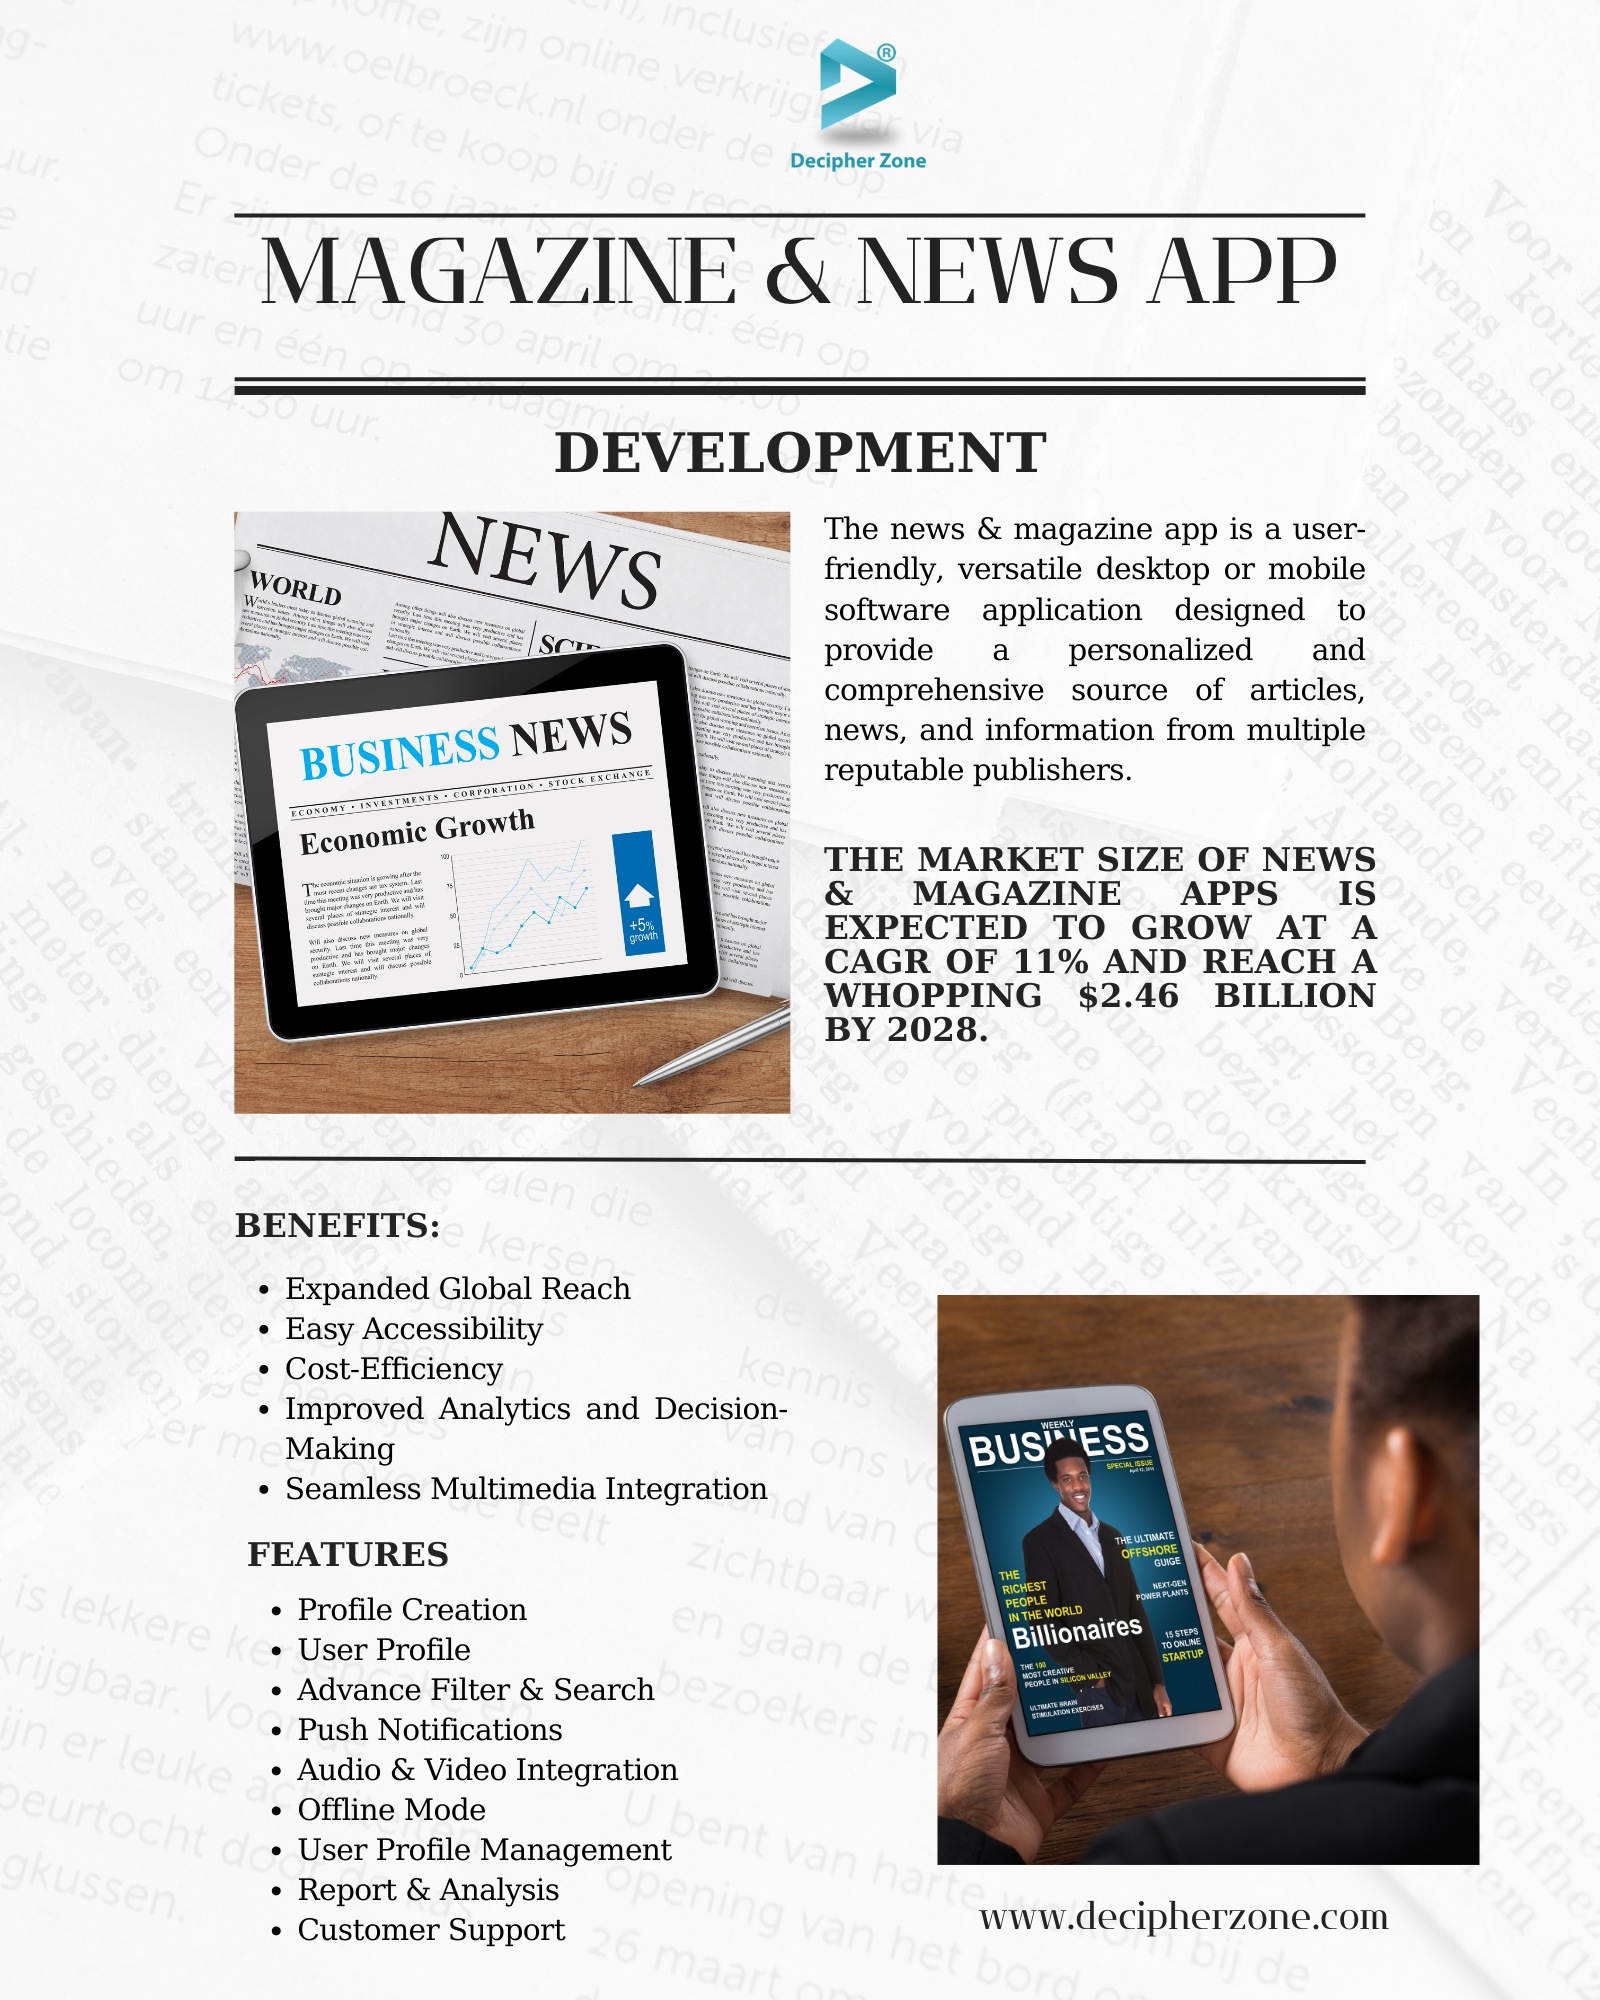 Magazine & Newspaper App Development